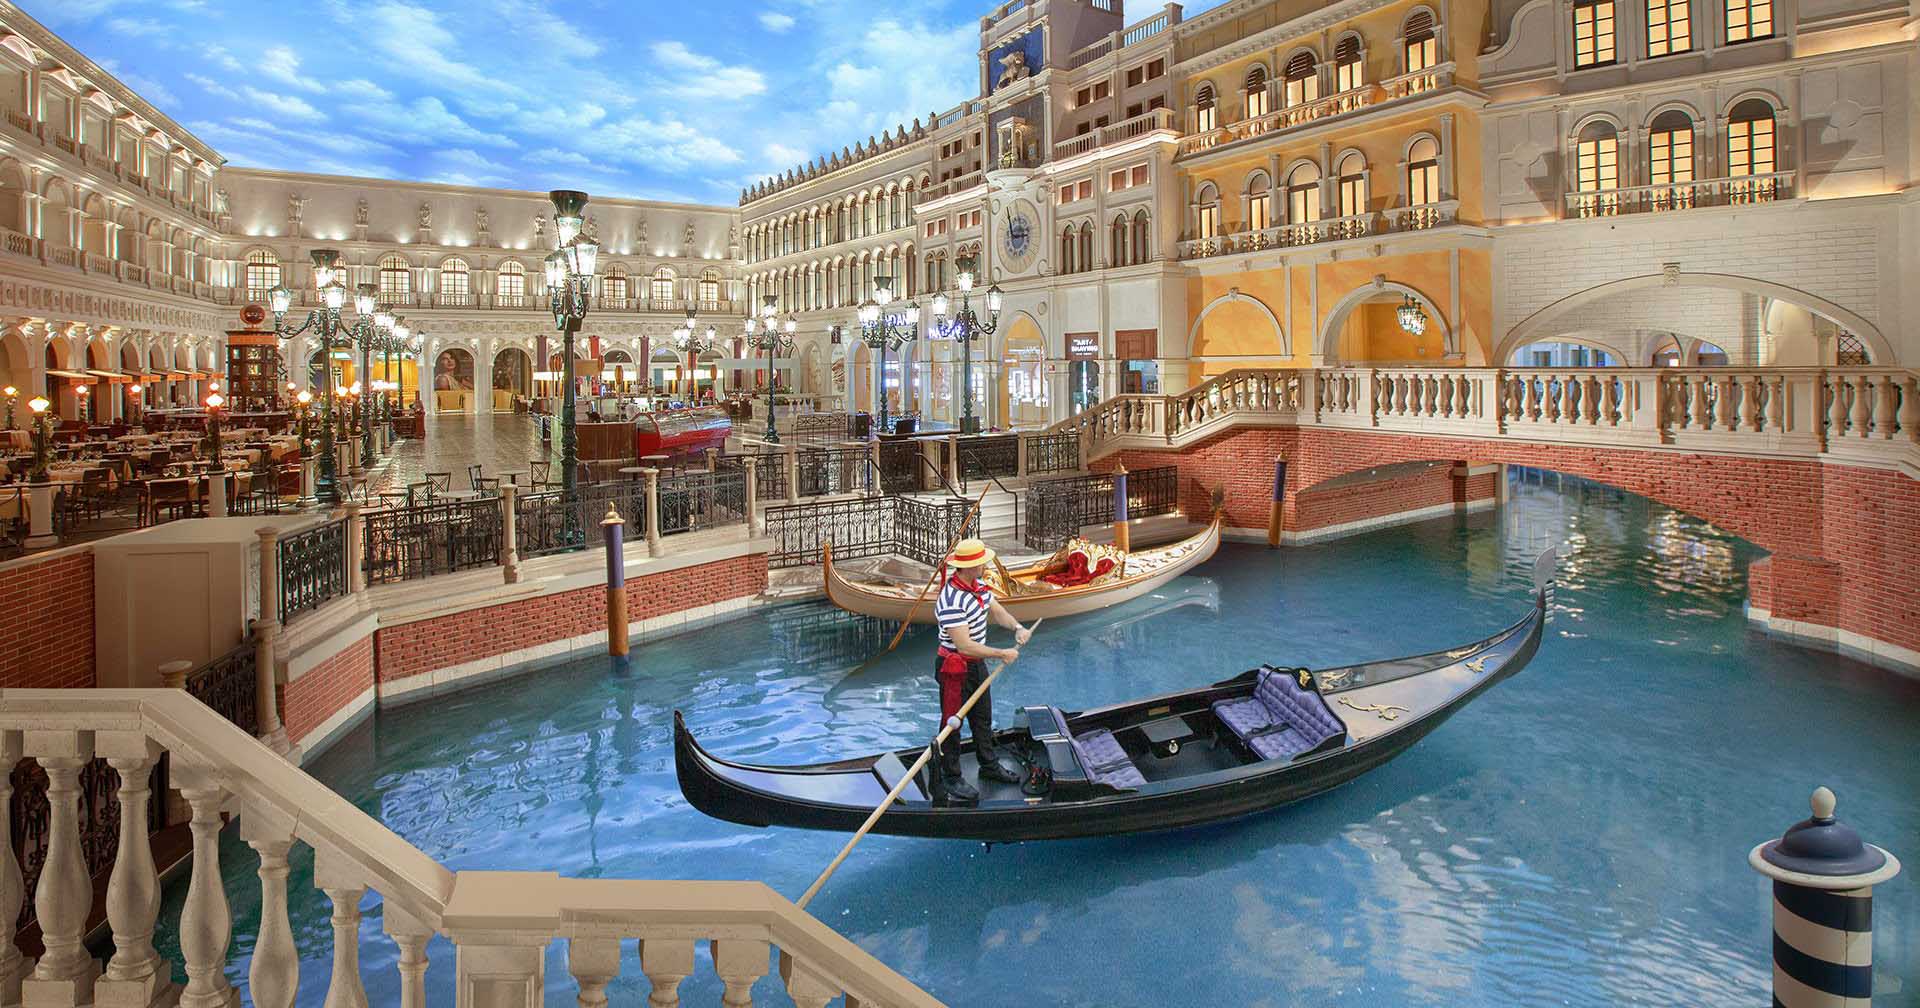 Venetian Las Vegas grand canal gondola